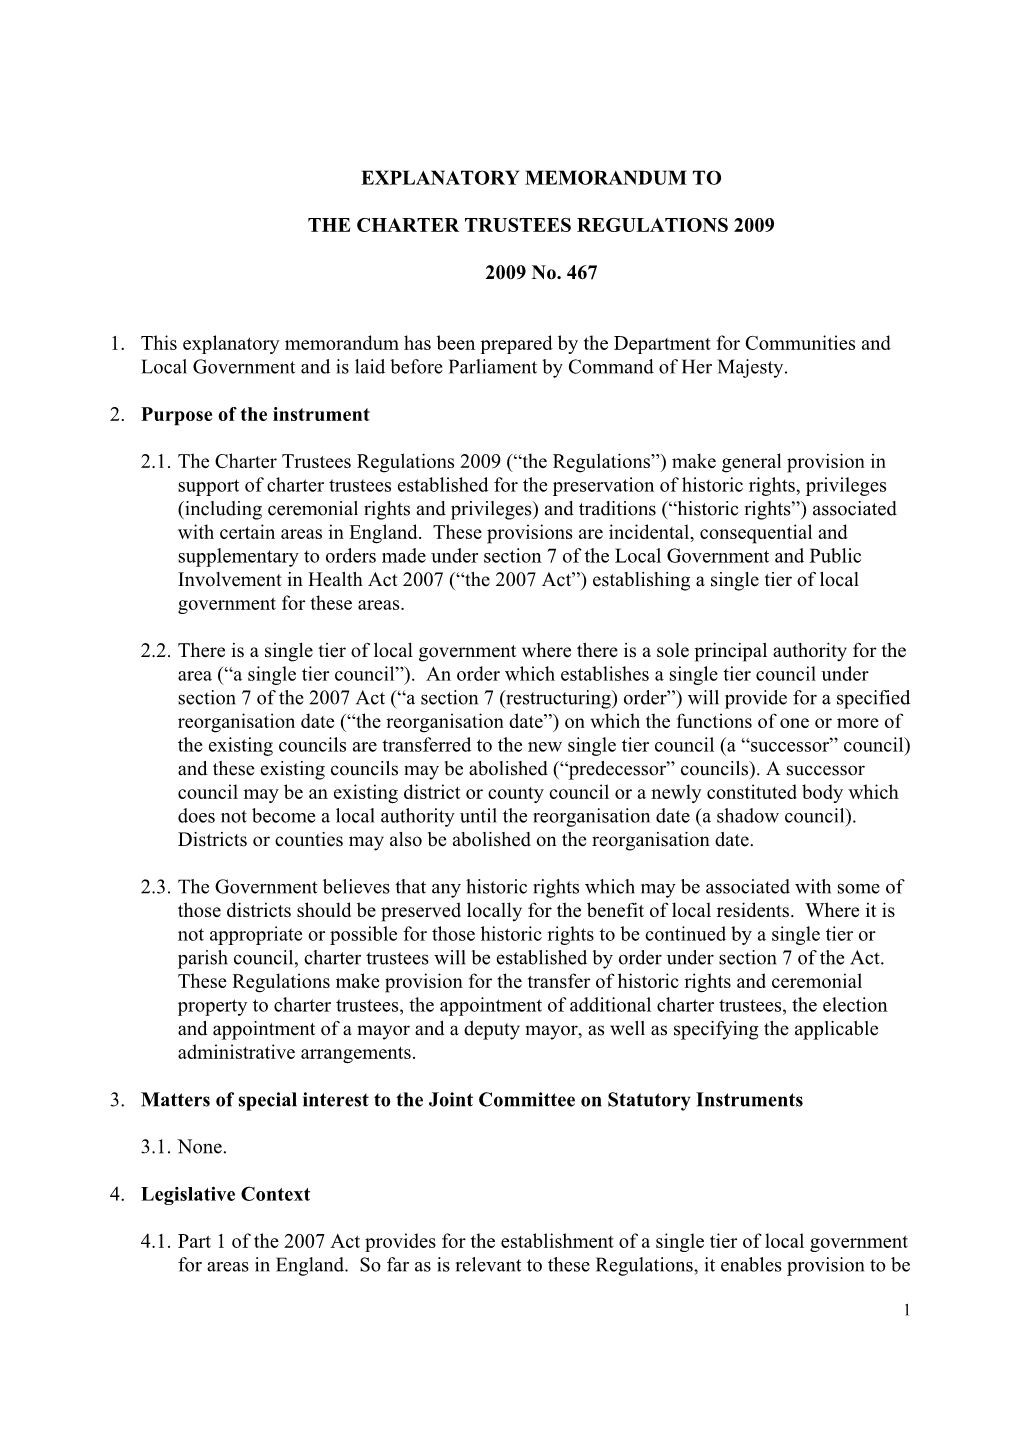 Explanatory Memorandum to the Charter Trustees